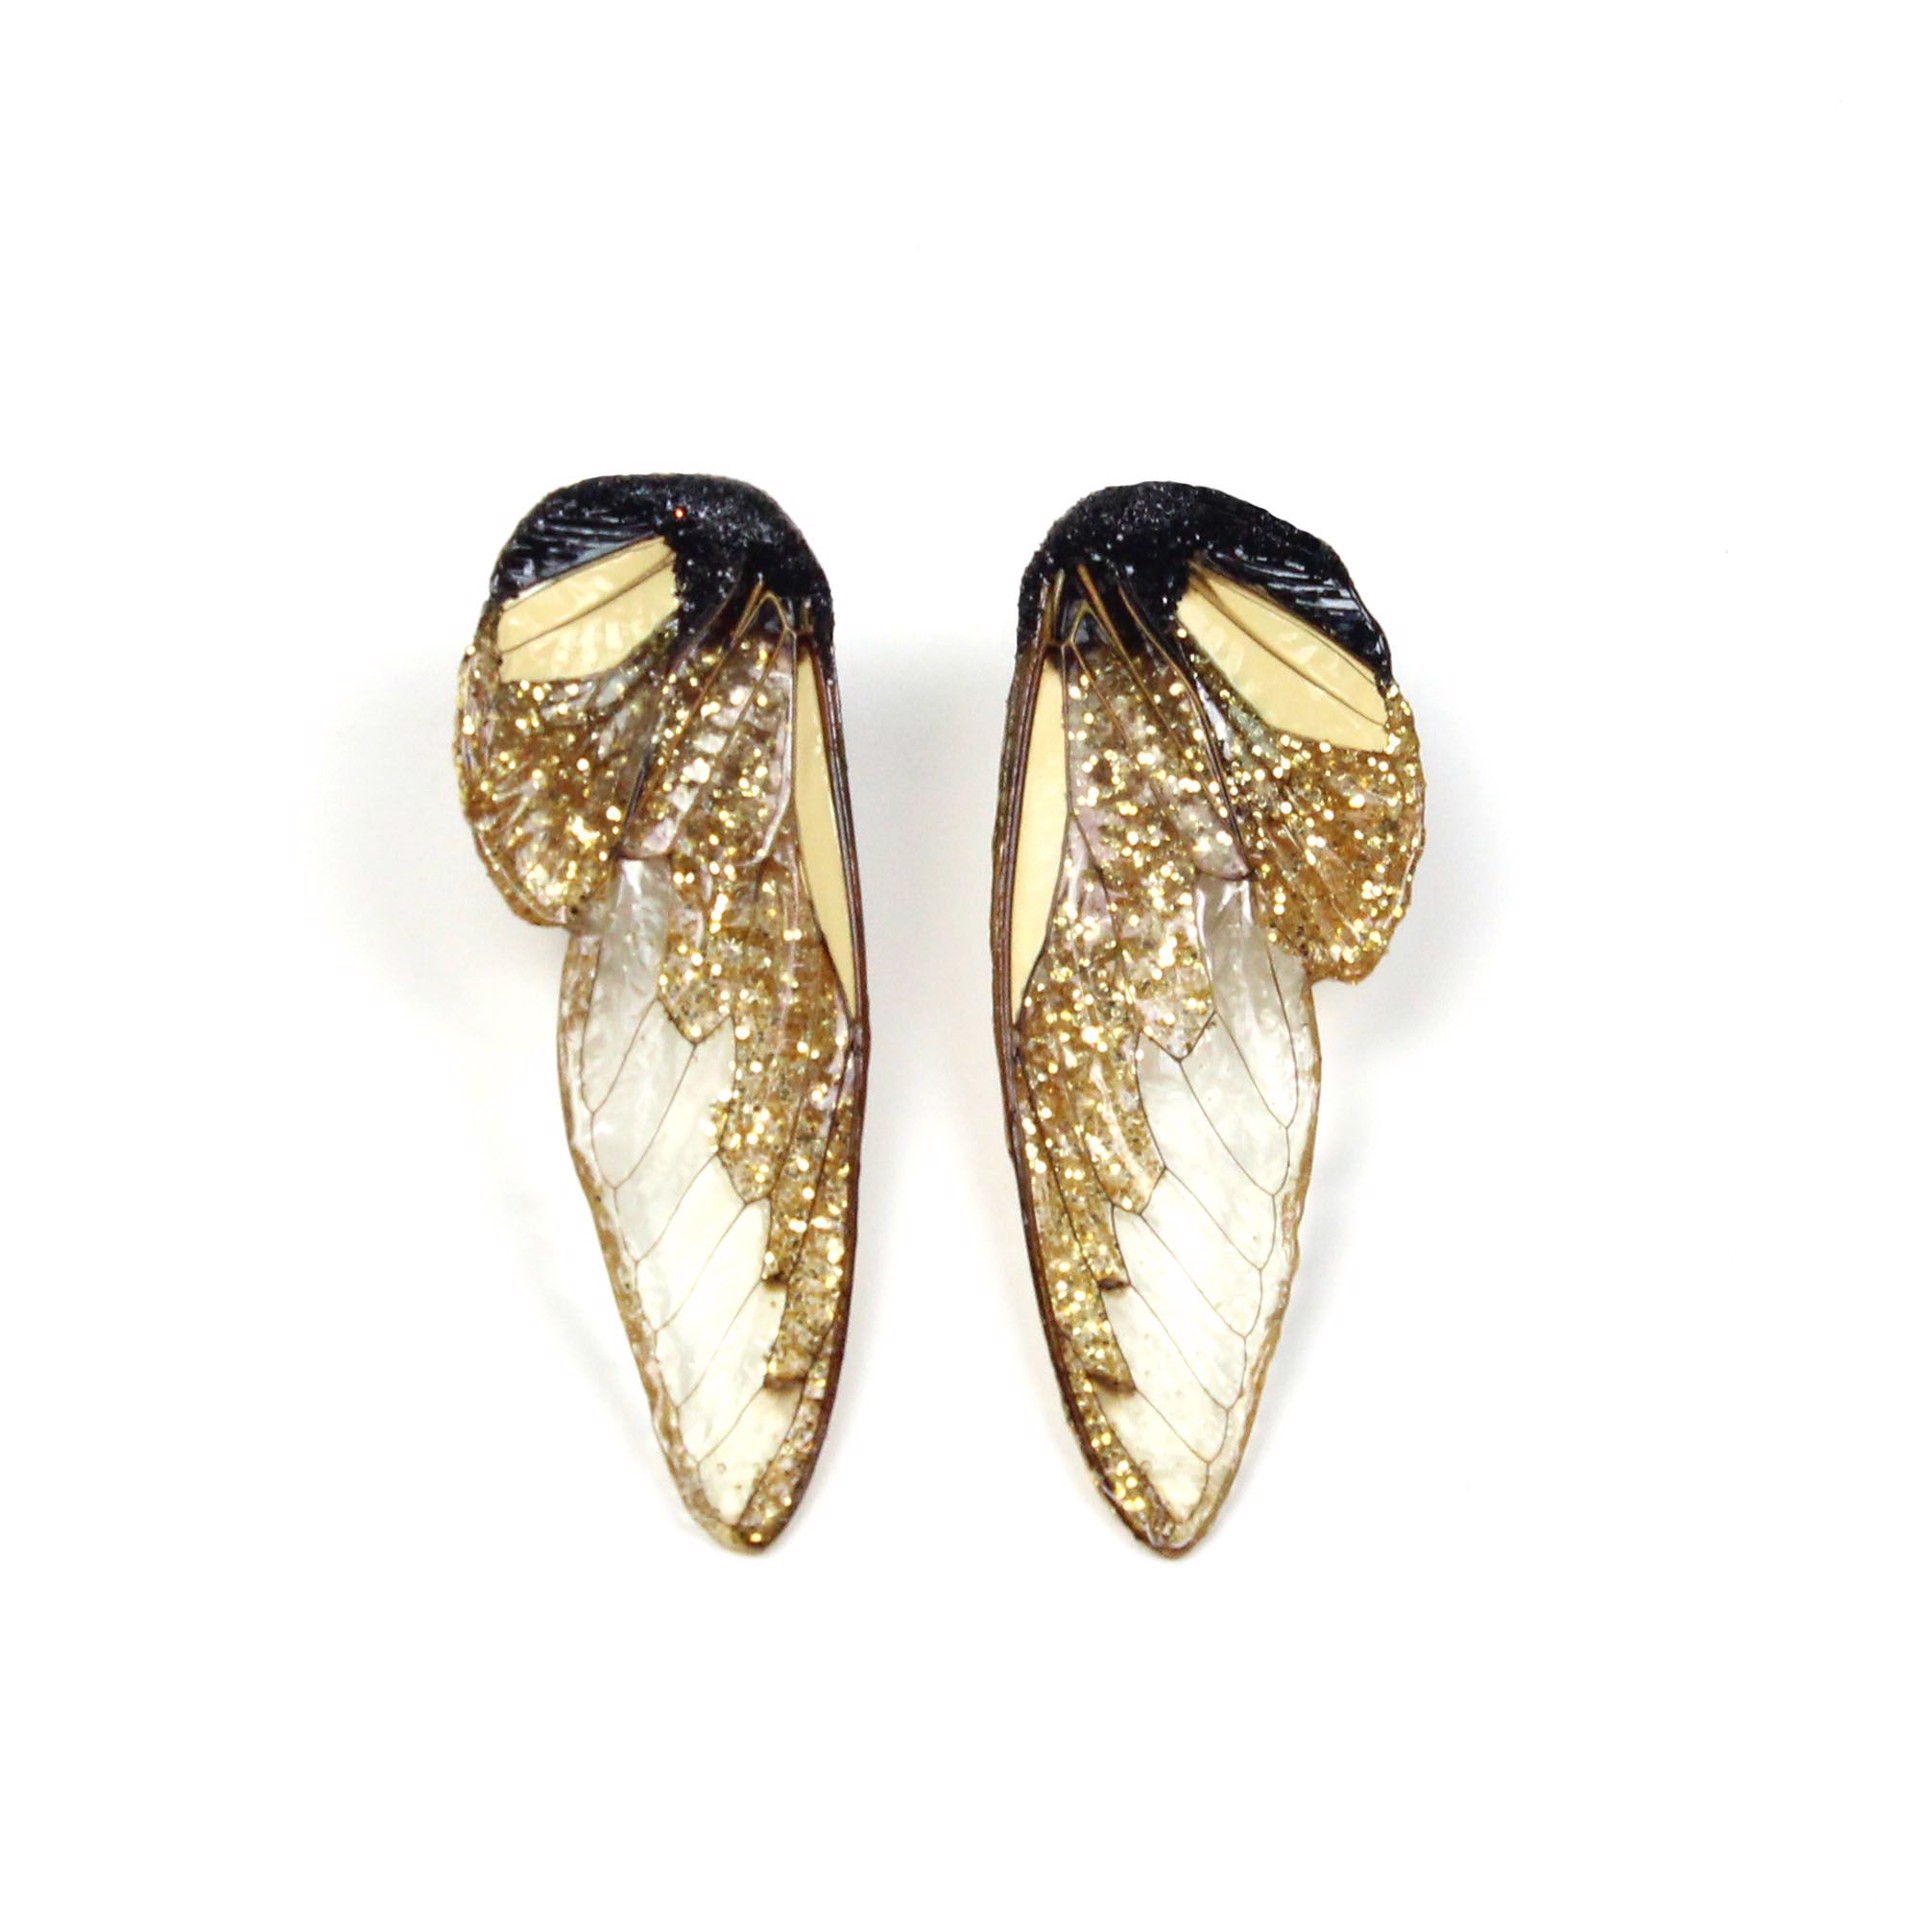 Golden Wing Earrings by Märta Mattsson